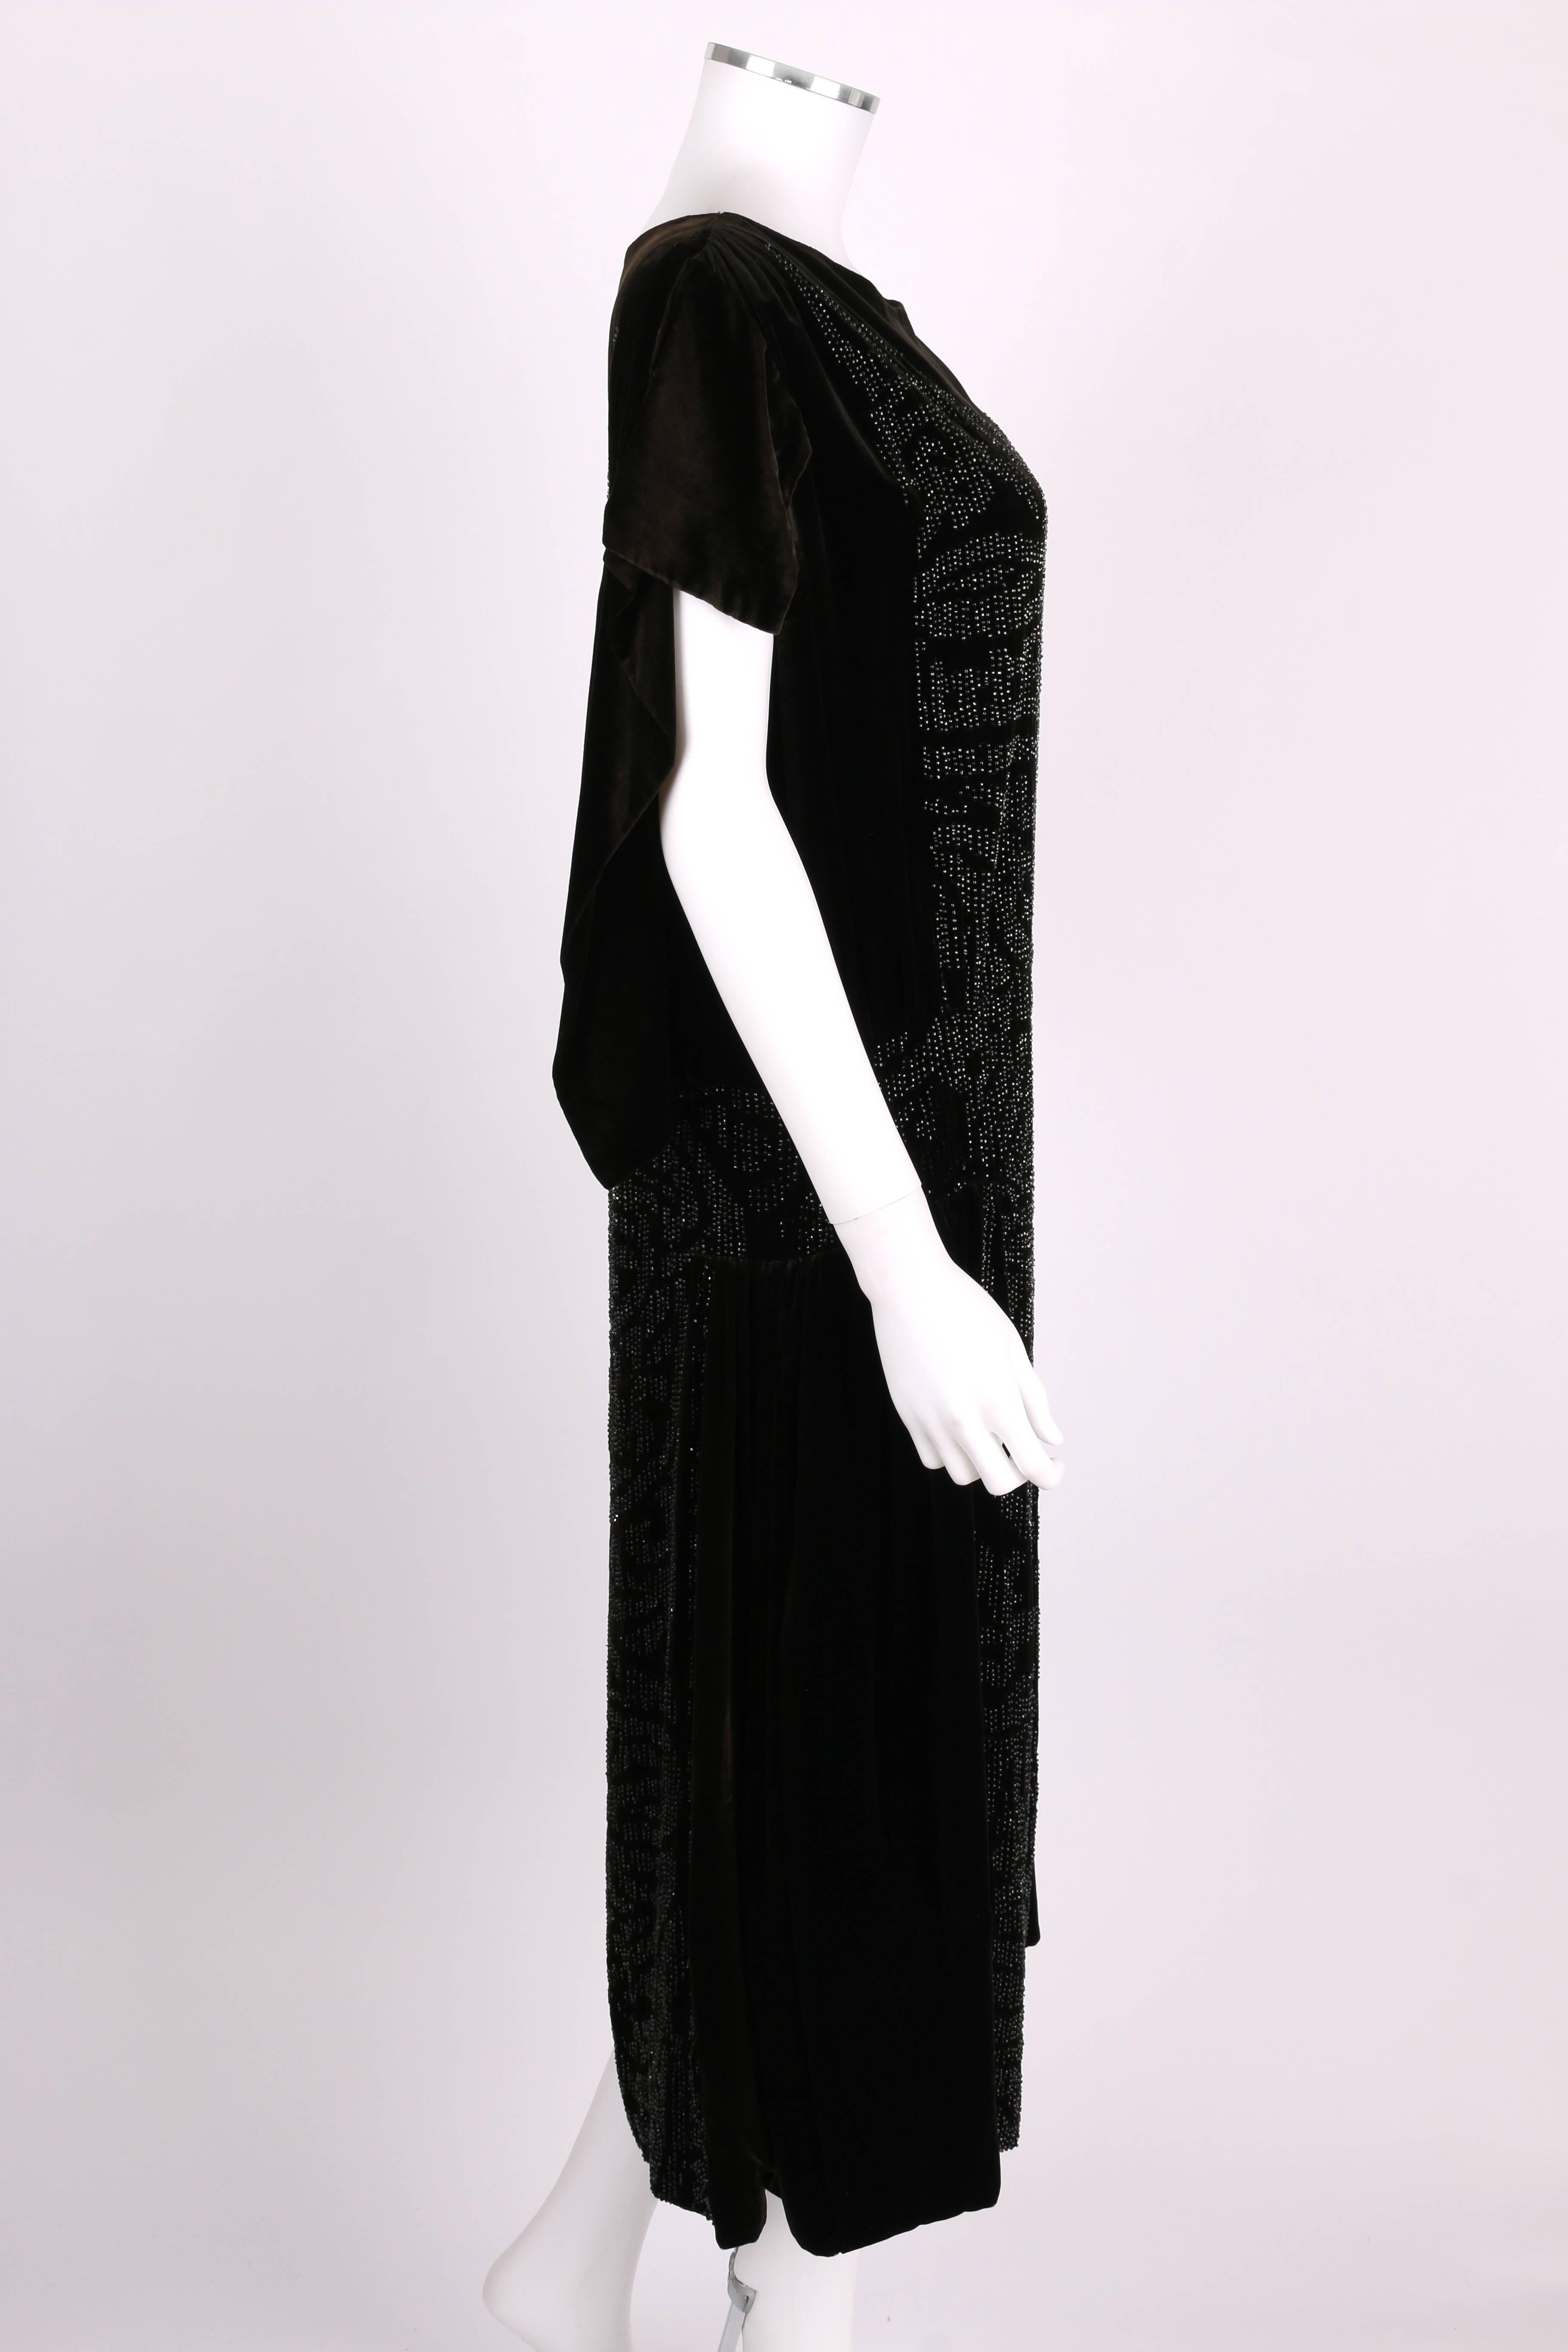 Noir ADAIR Paris - Robe de soirée de soirée en velours de soie noir perlé, taille XL, circa 1922 en vente